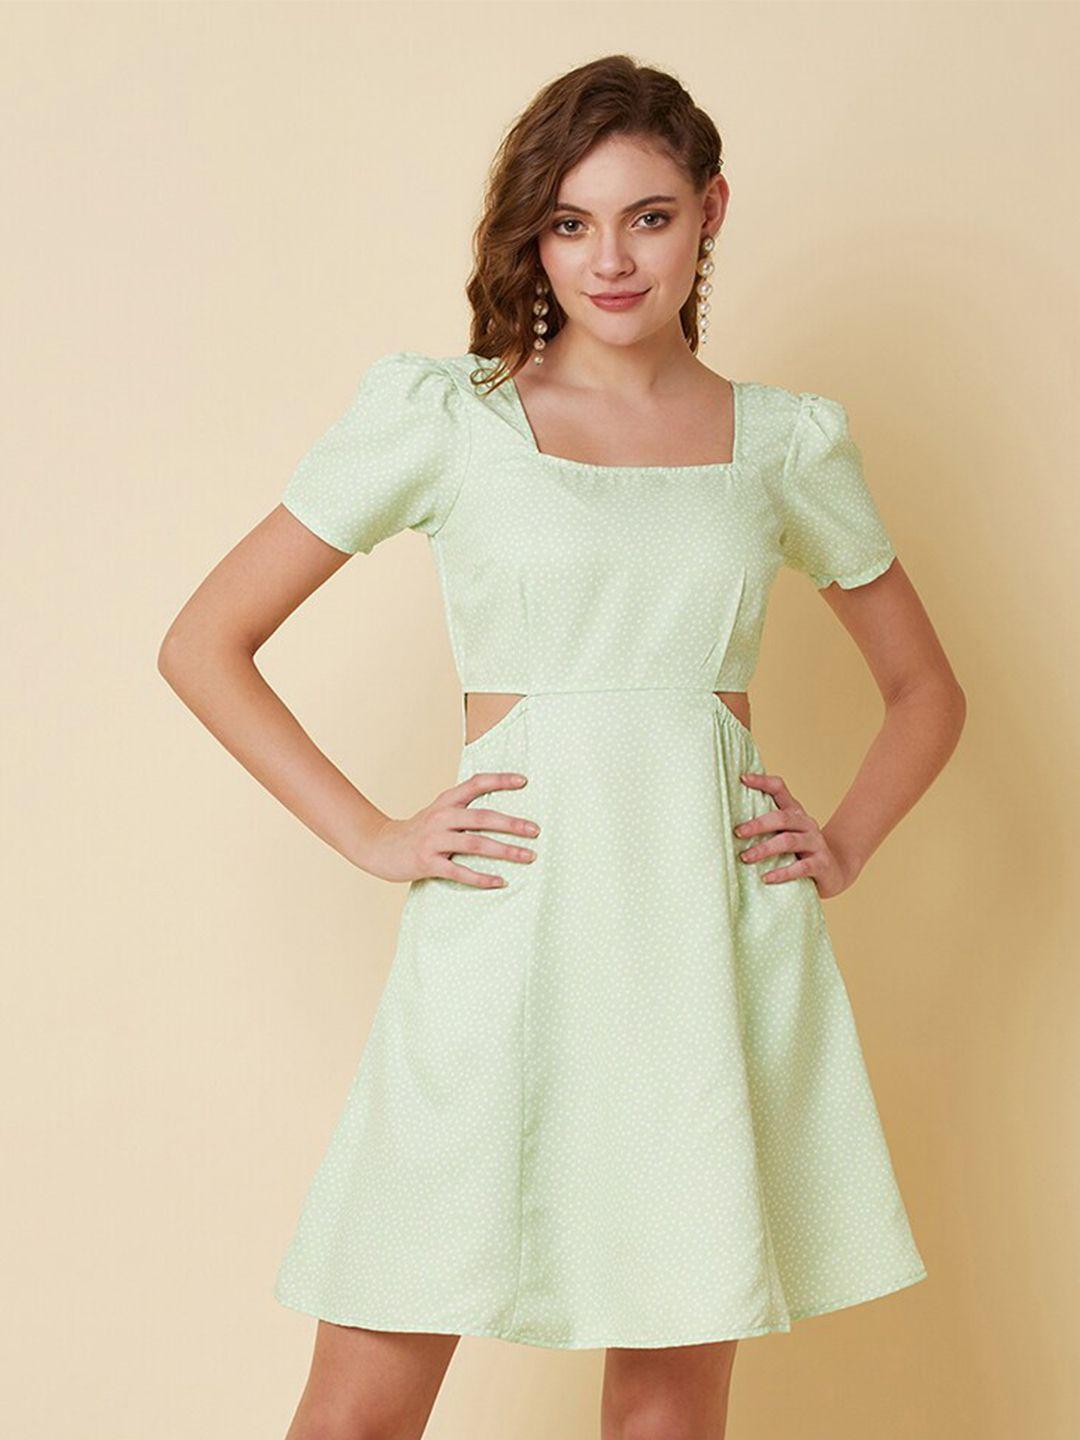 raassio green polka dots printed a-line dress